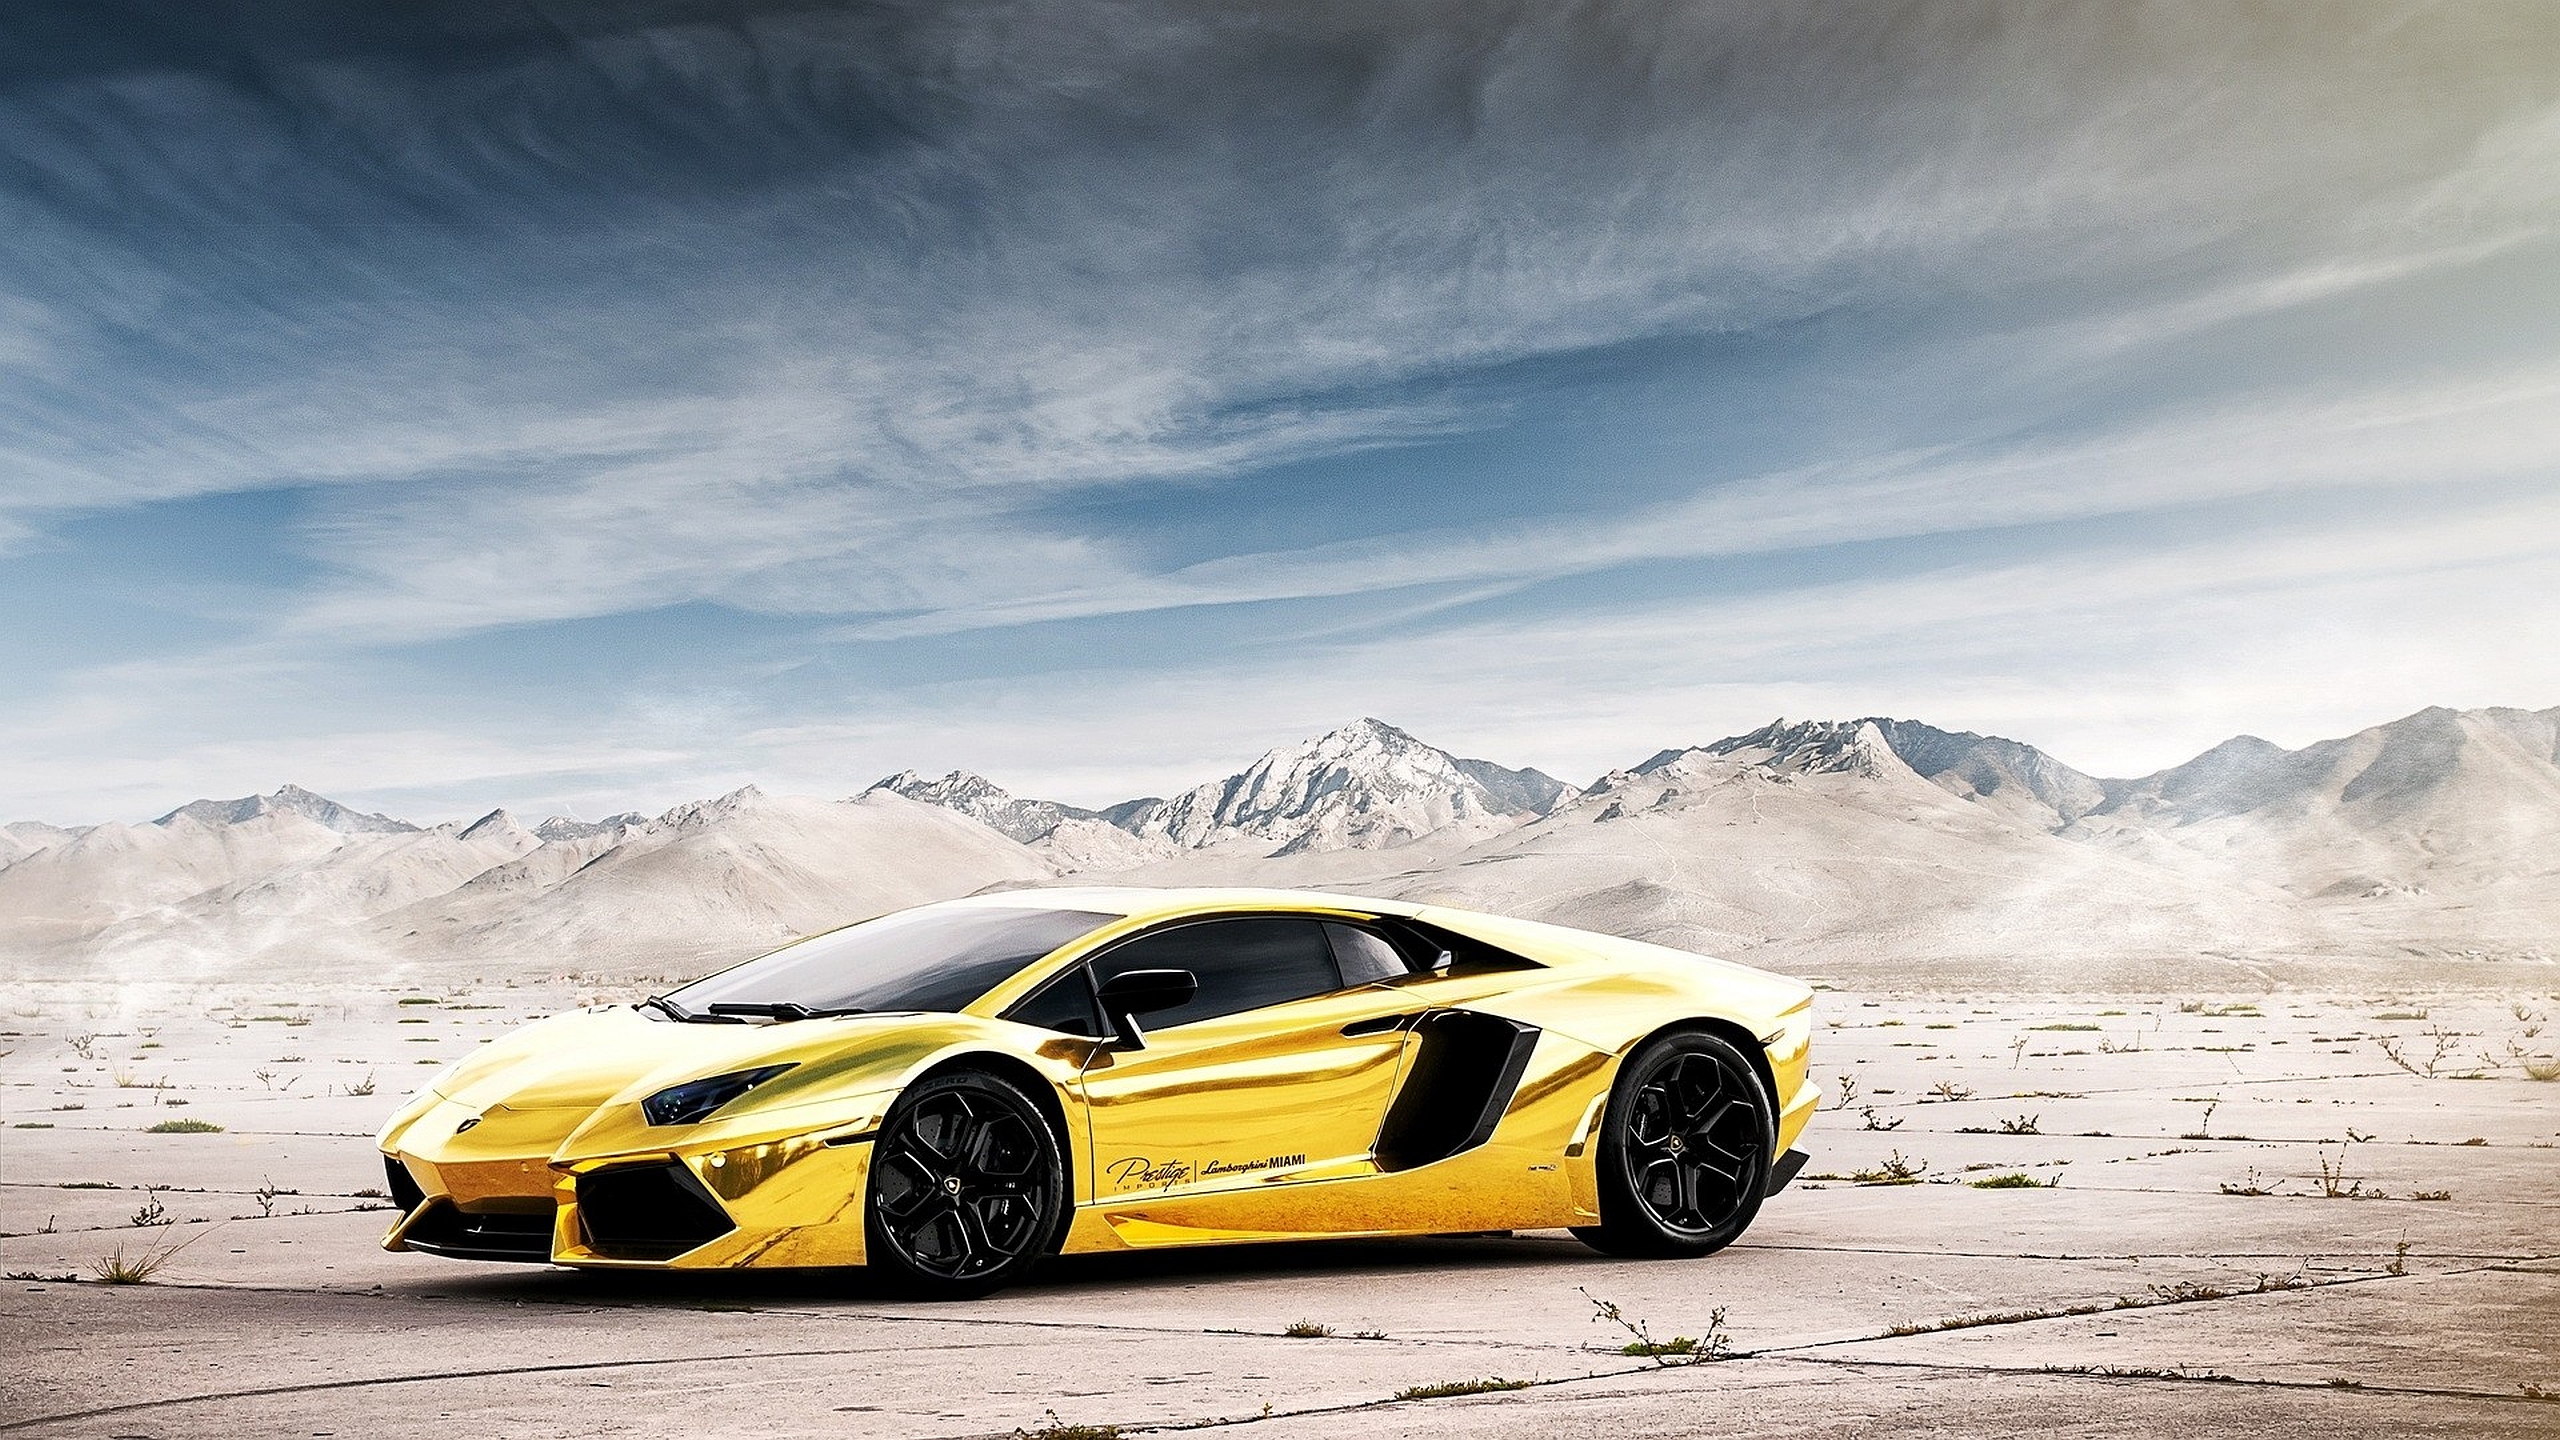 Free download Yellow Lamborghini Project AU79 Sport Car Images